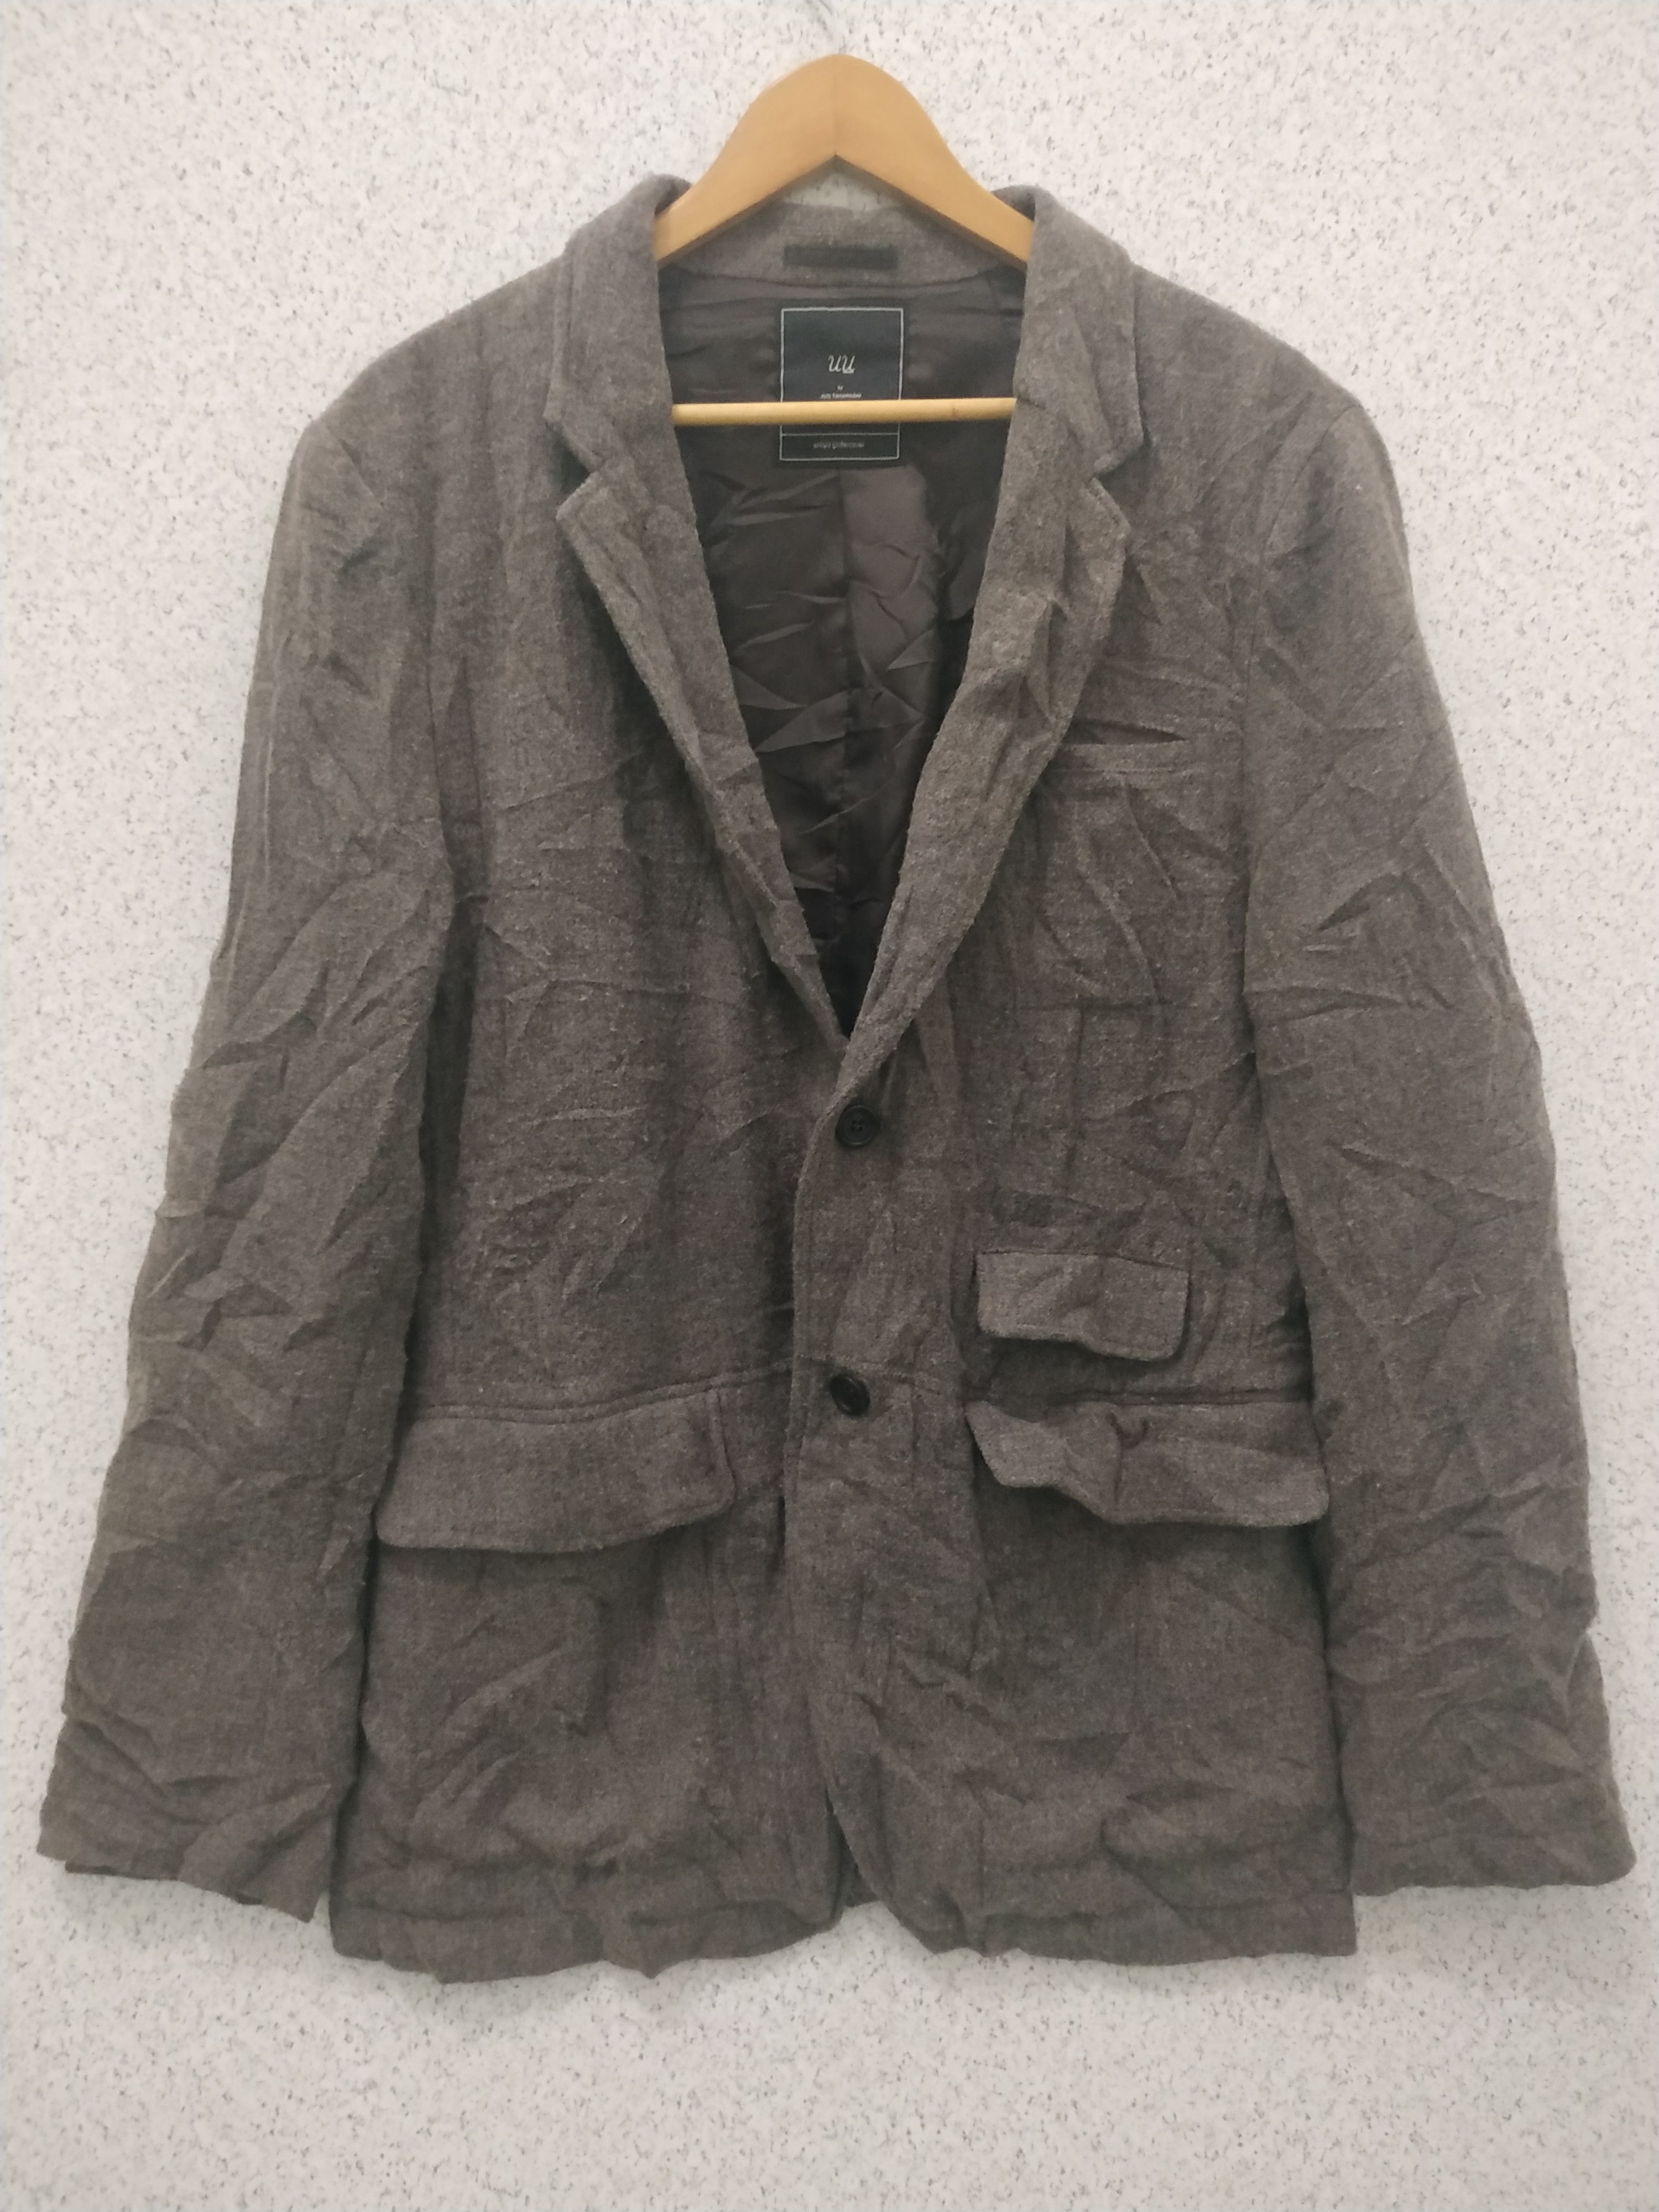 Undercover Jun Takahashi Design Undercover Wool Coat Uniqlo | Grailed